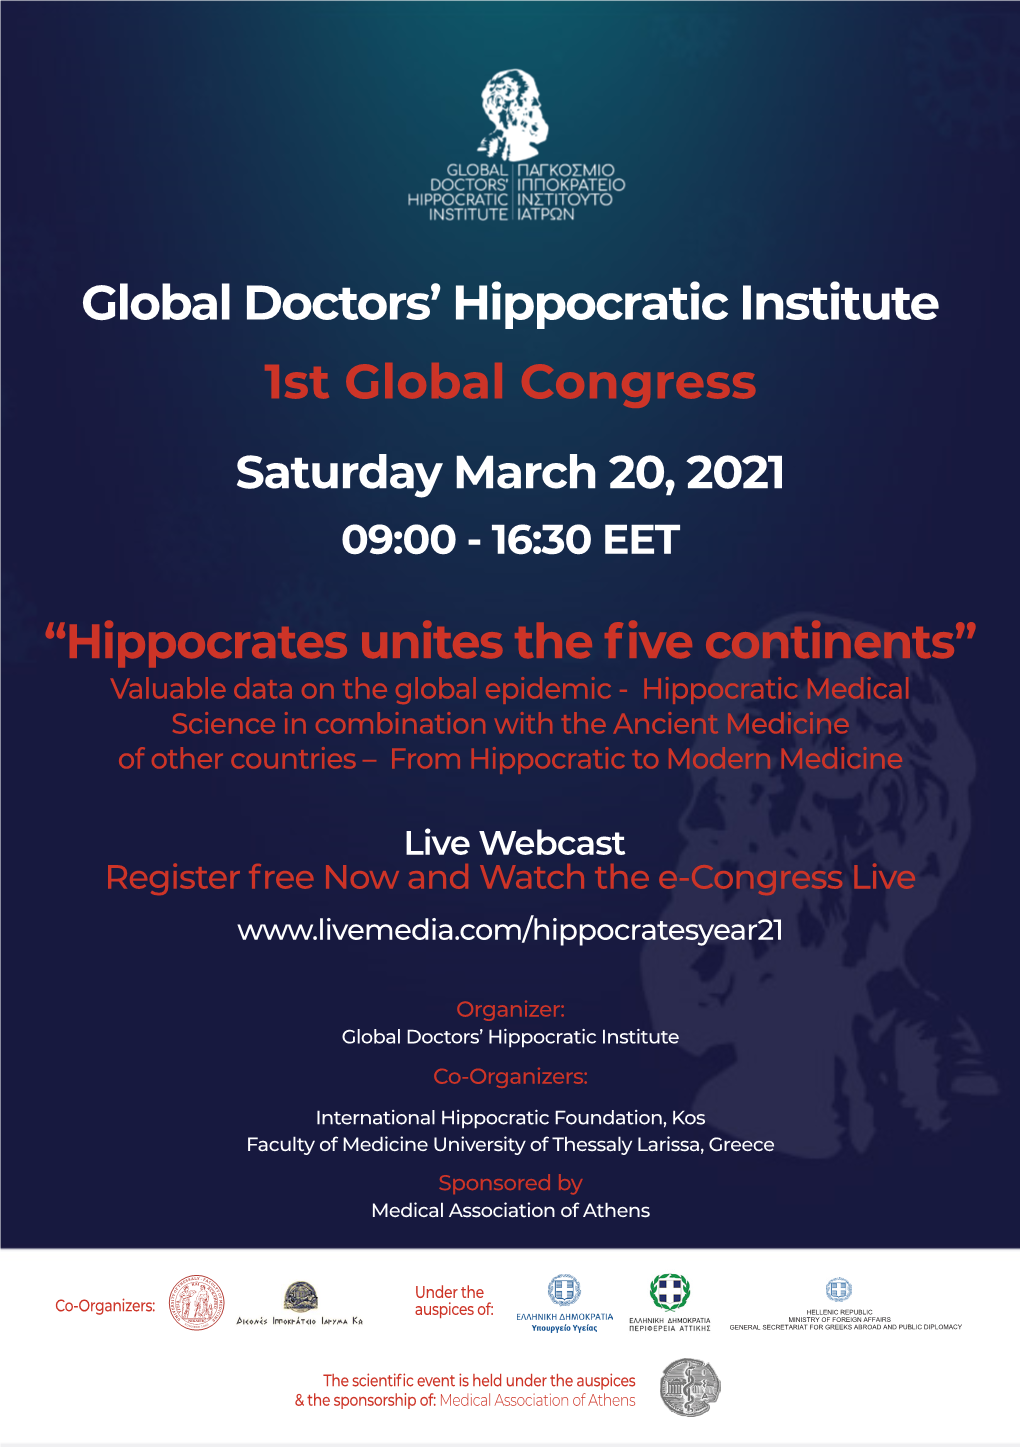 Global Doctors' Hippocratic Institute “Hippocrates Unites the Five